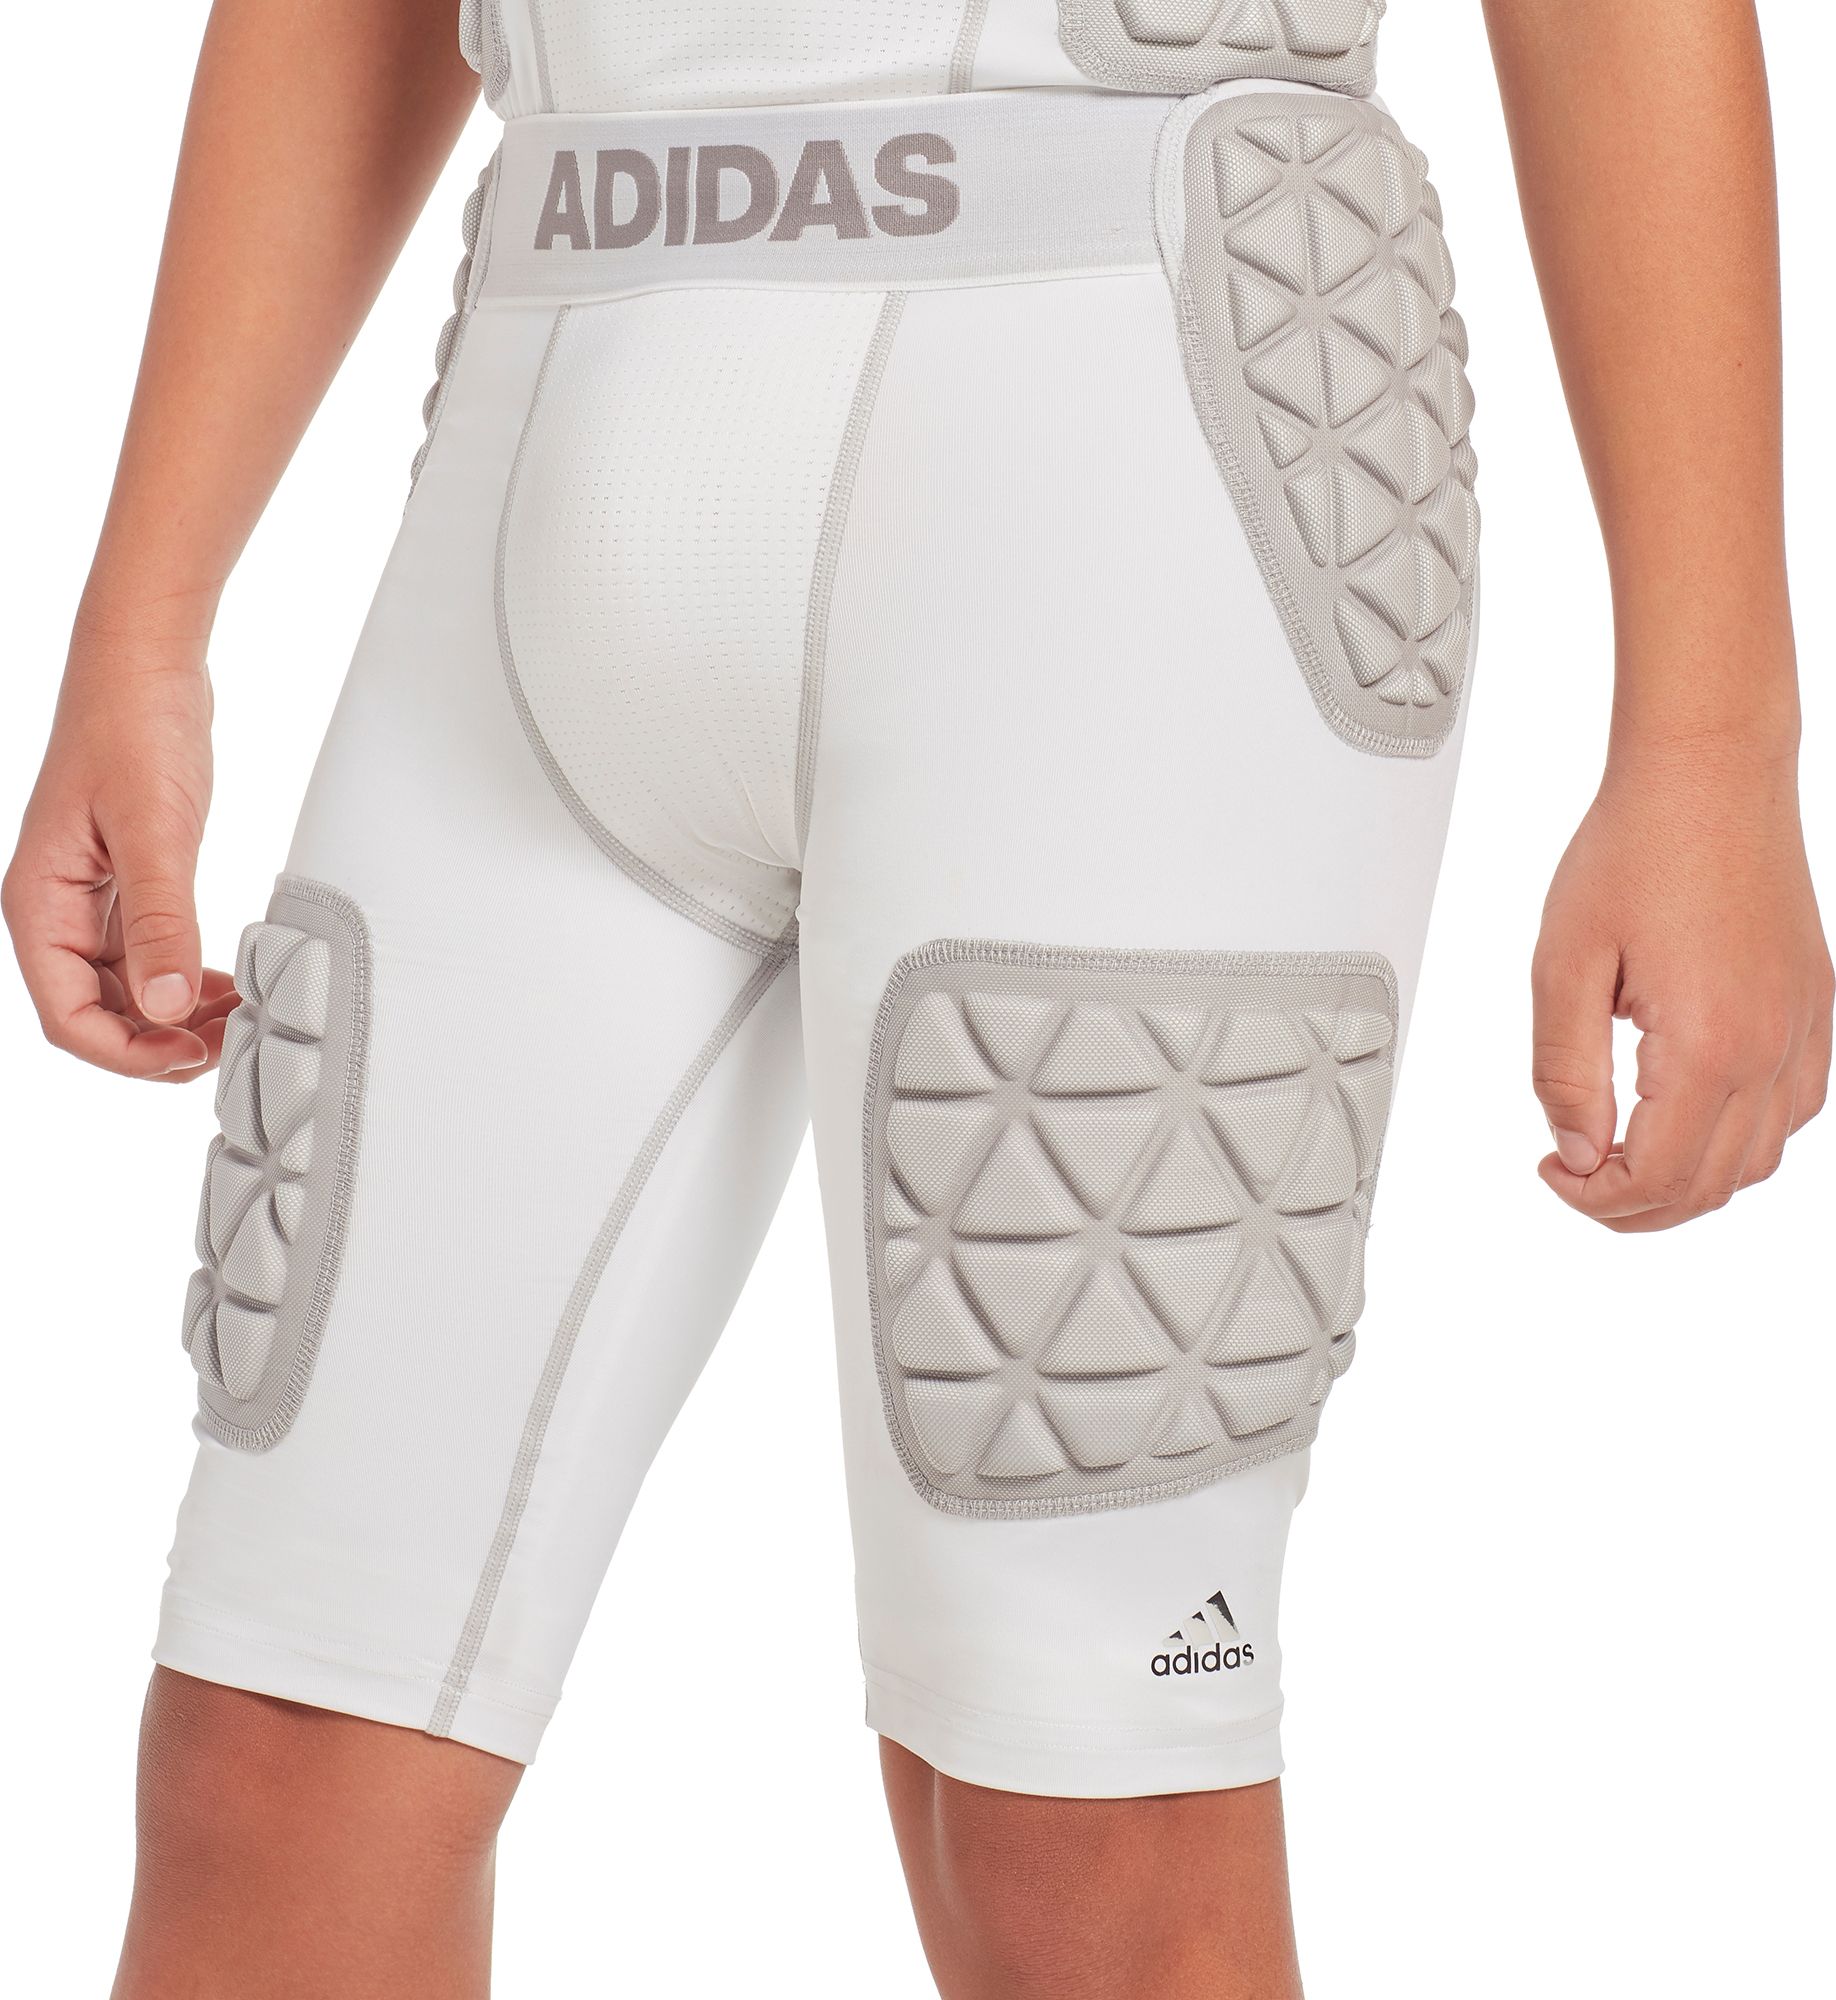 adidas football compression pants